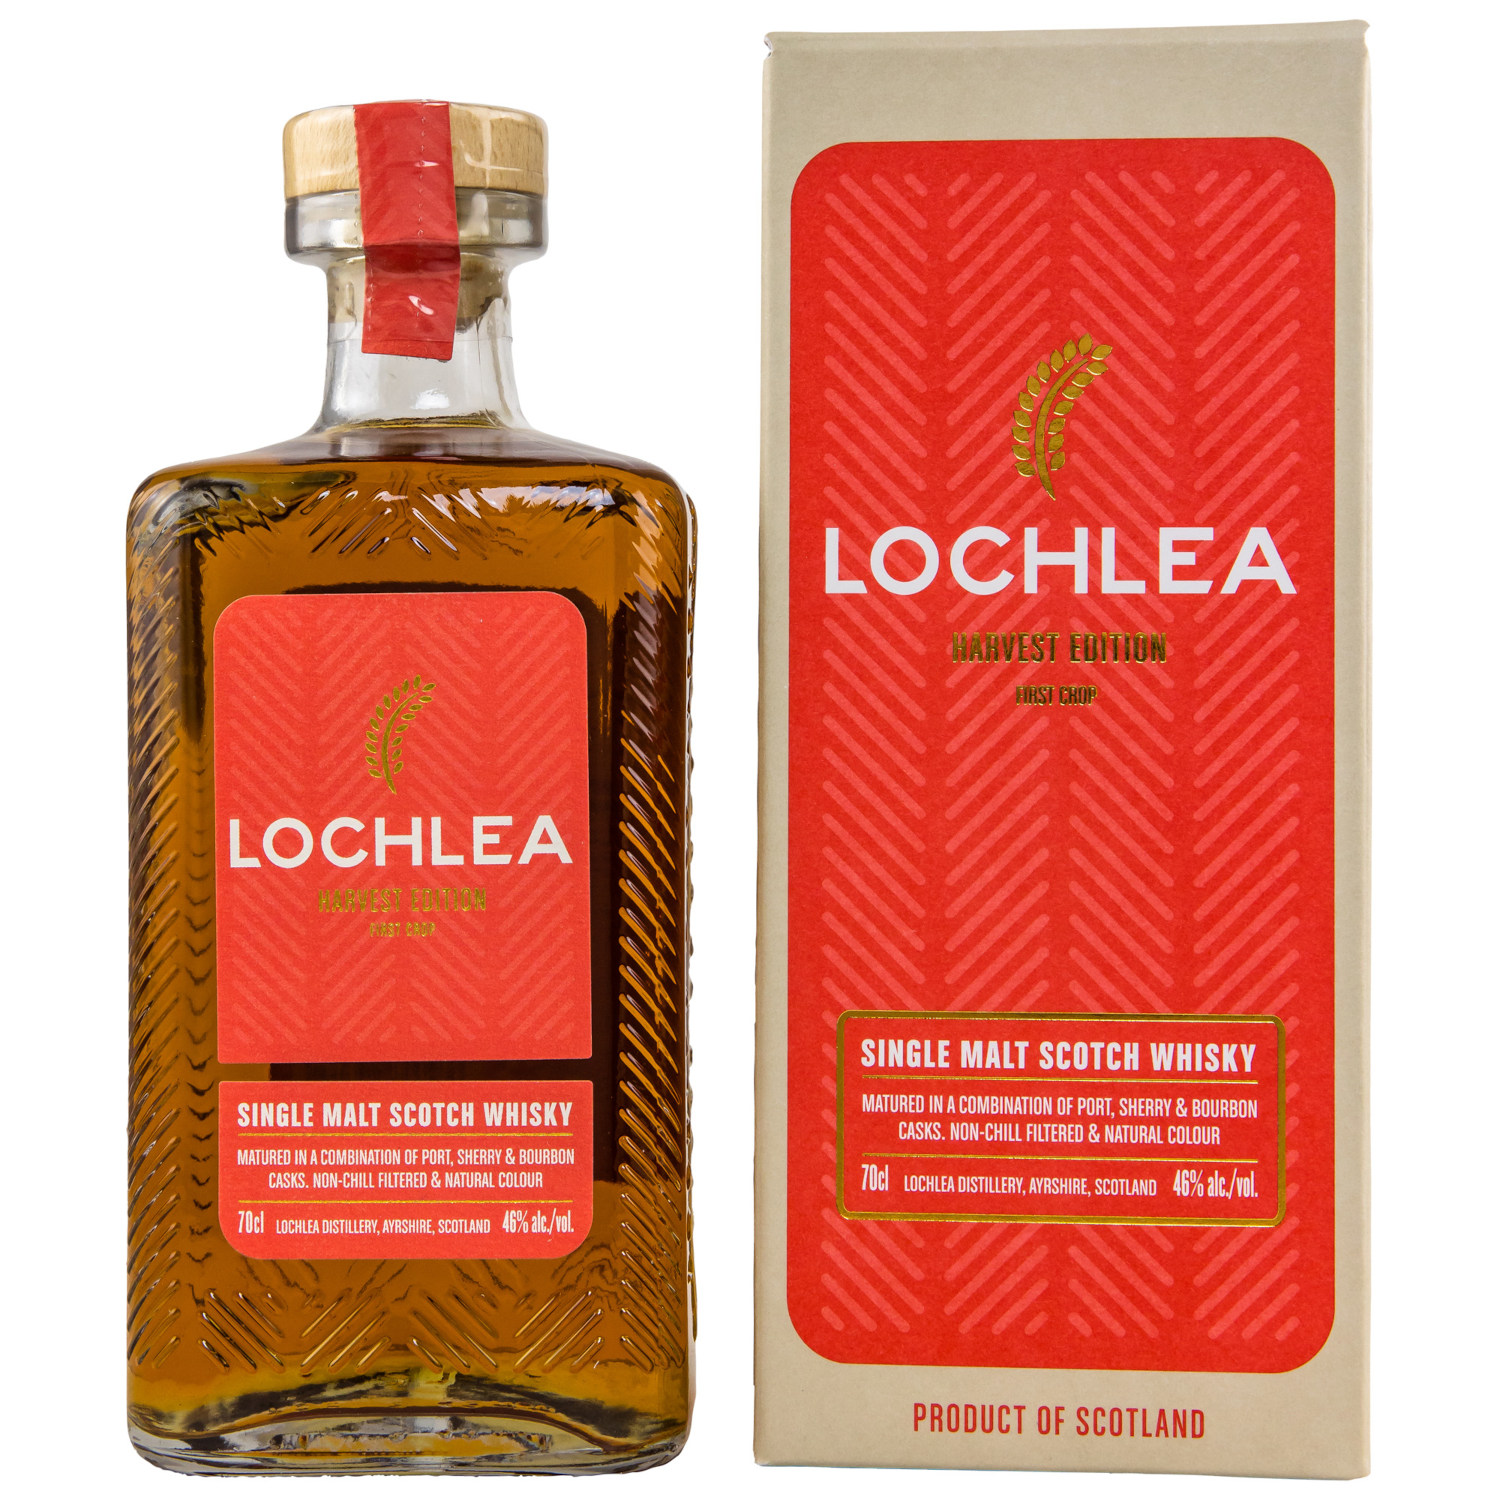 Lochlea Harvest Edition First Crop Single Malt Scotch Whisky